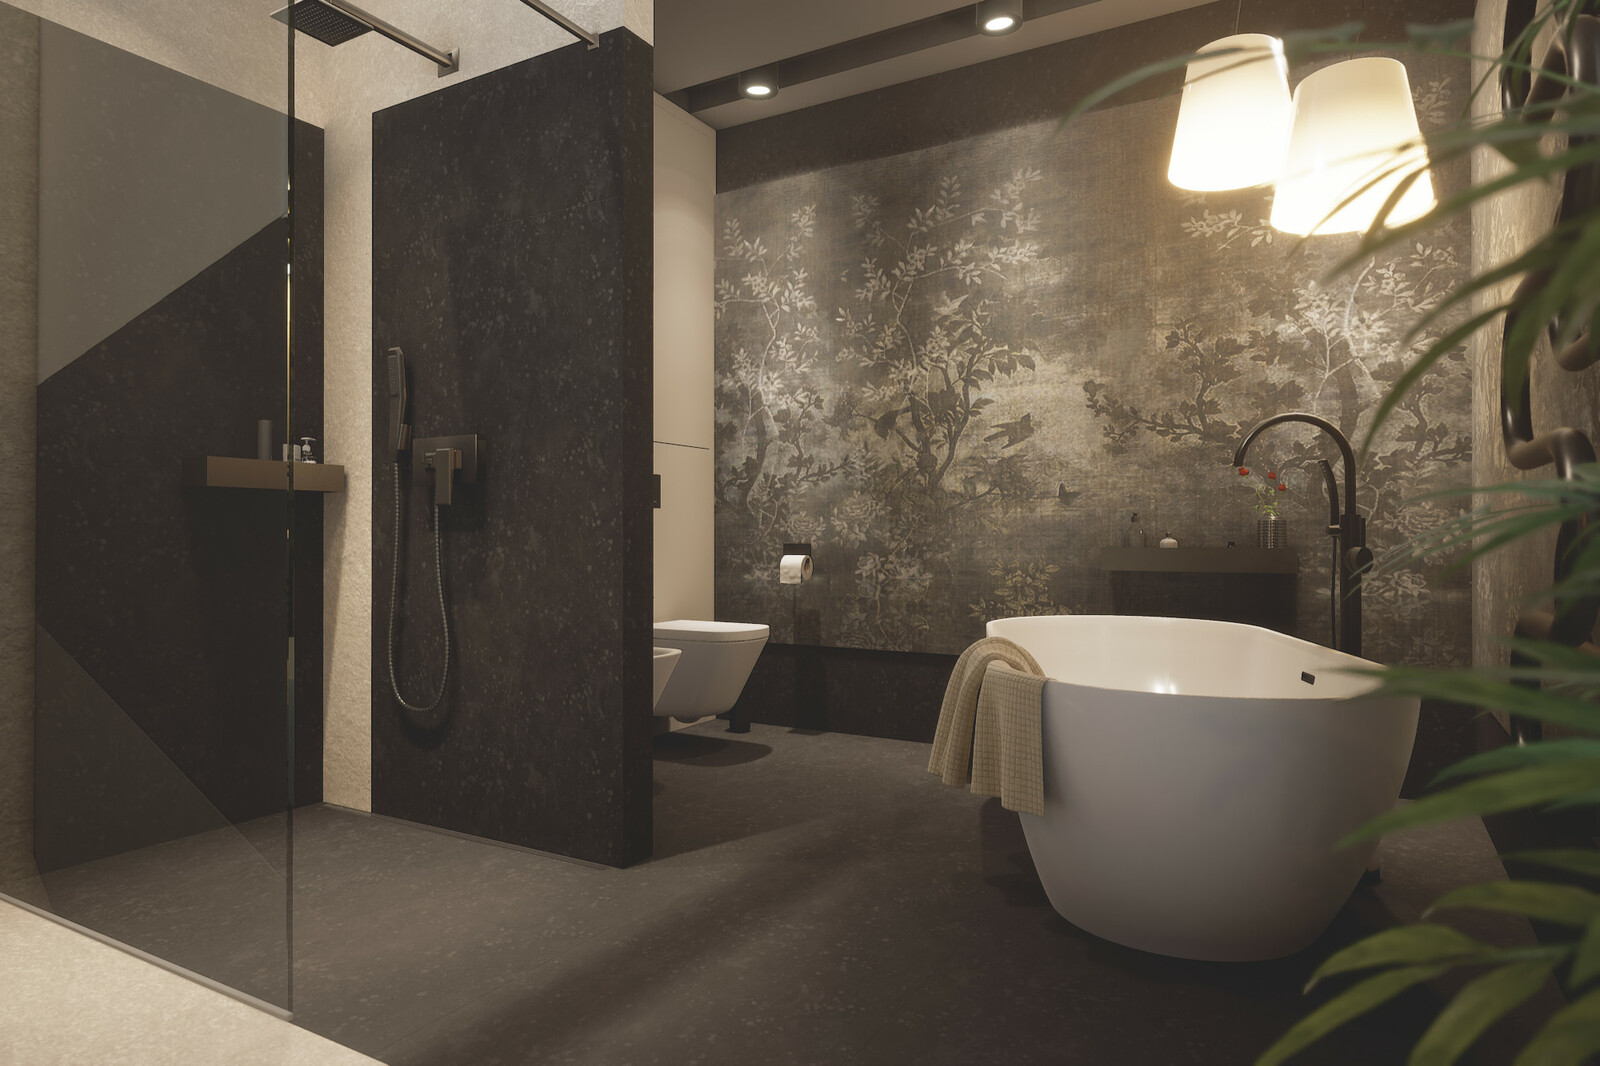 the Finnish Meditation Interior - bathroom with sauna ( Unreal Engine / UE4 )